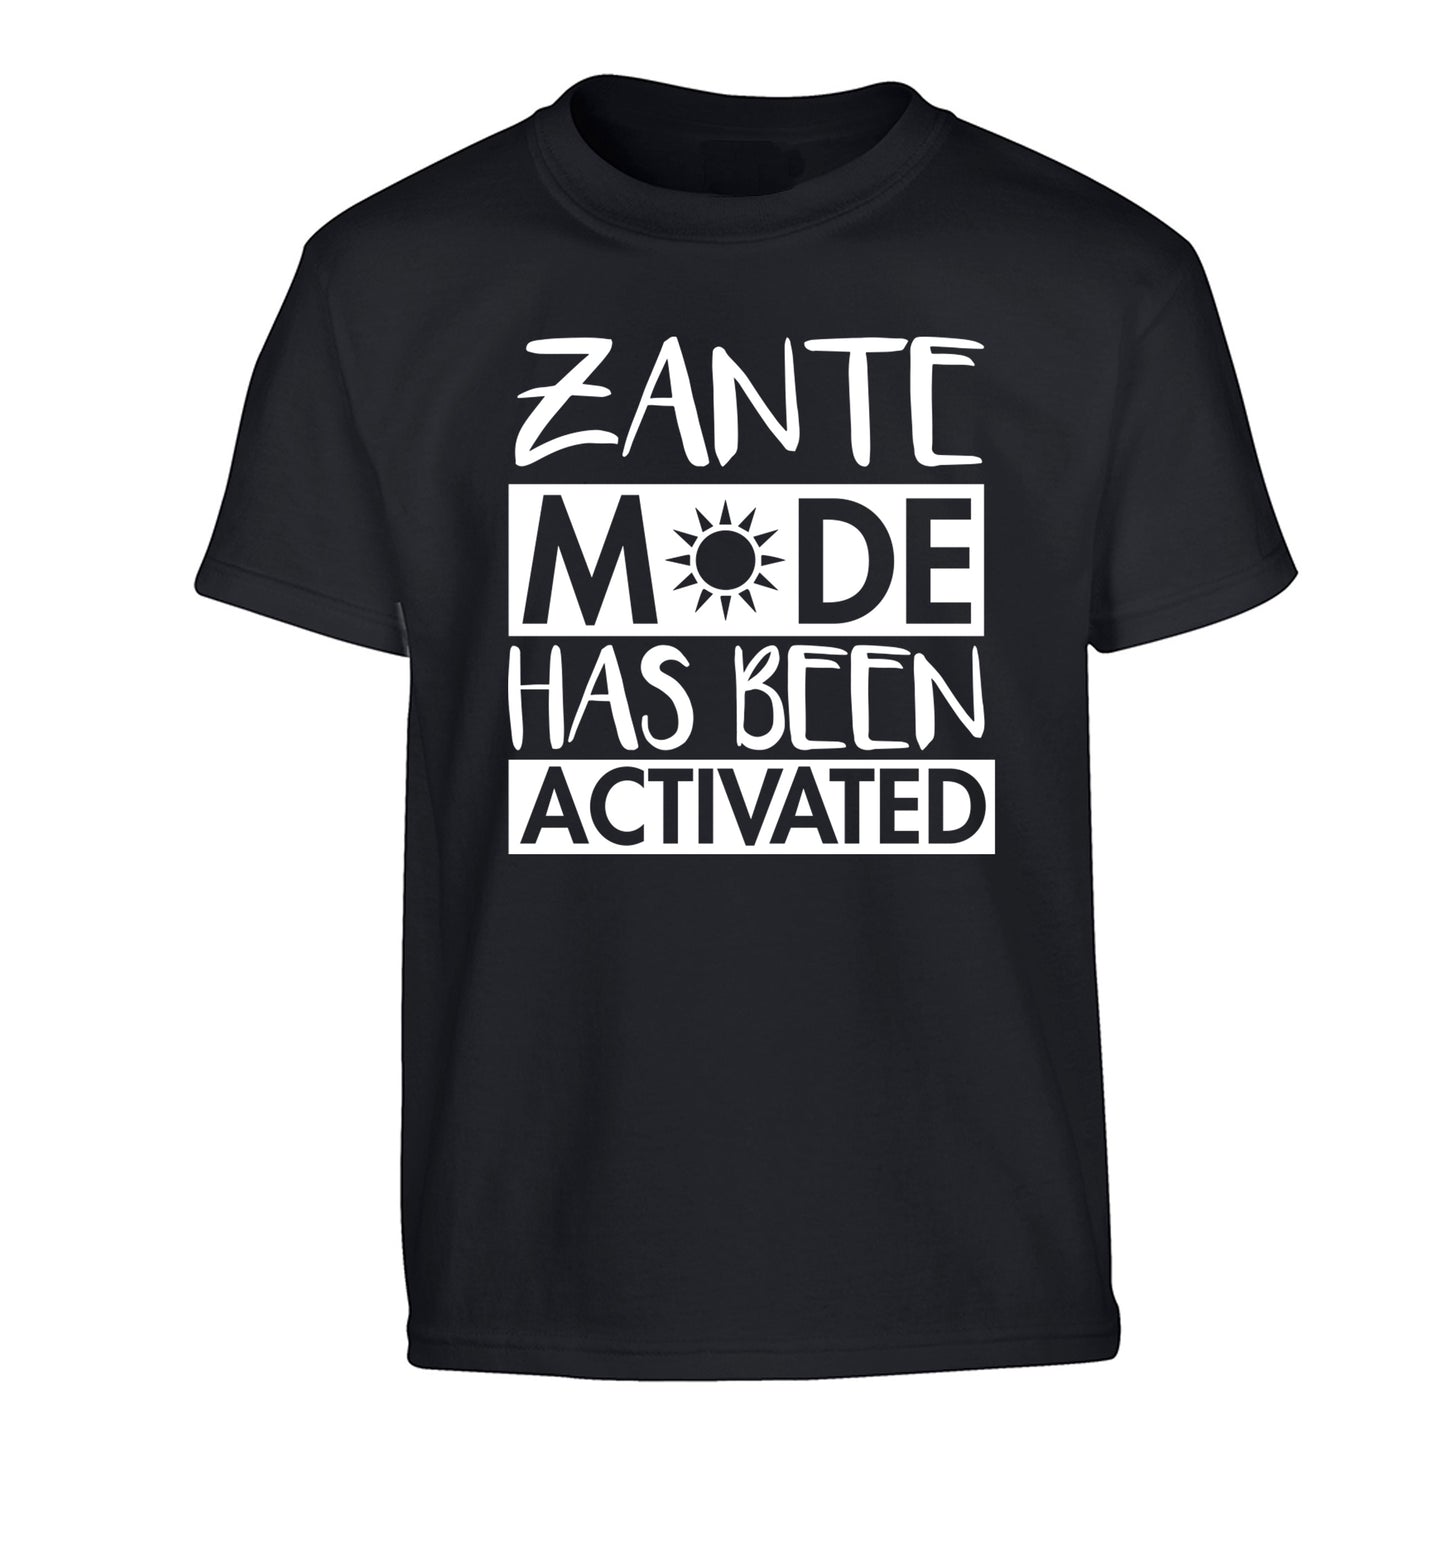 Zante mode has been activated Children's black Tshirt 12-13 Years